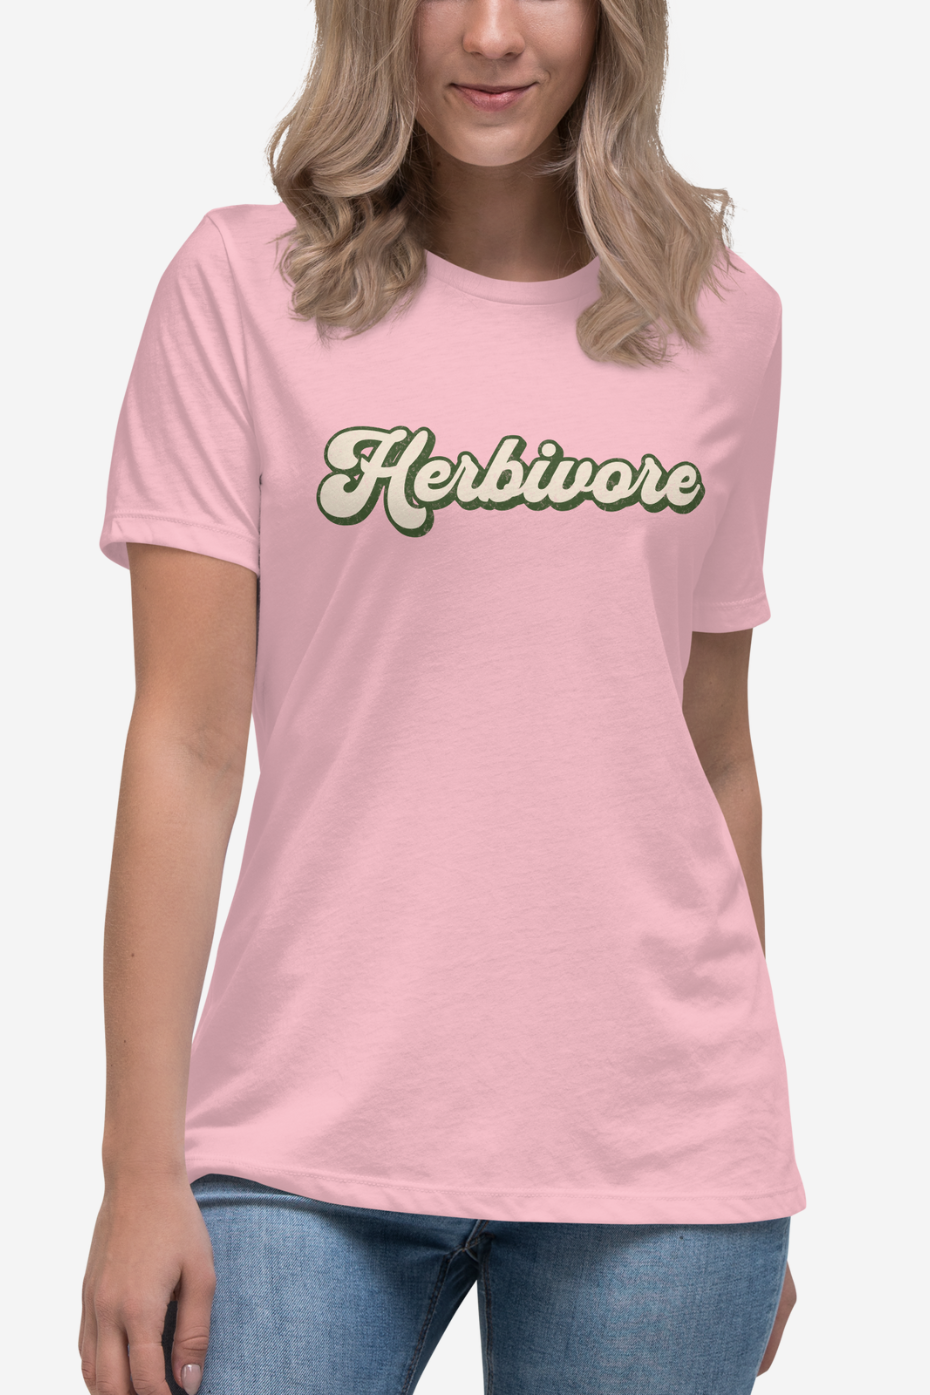 Herbivore Women's Relaxed T-Shirt